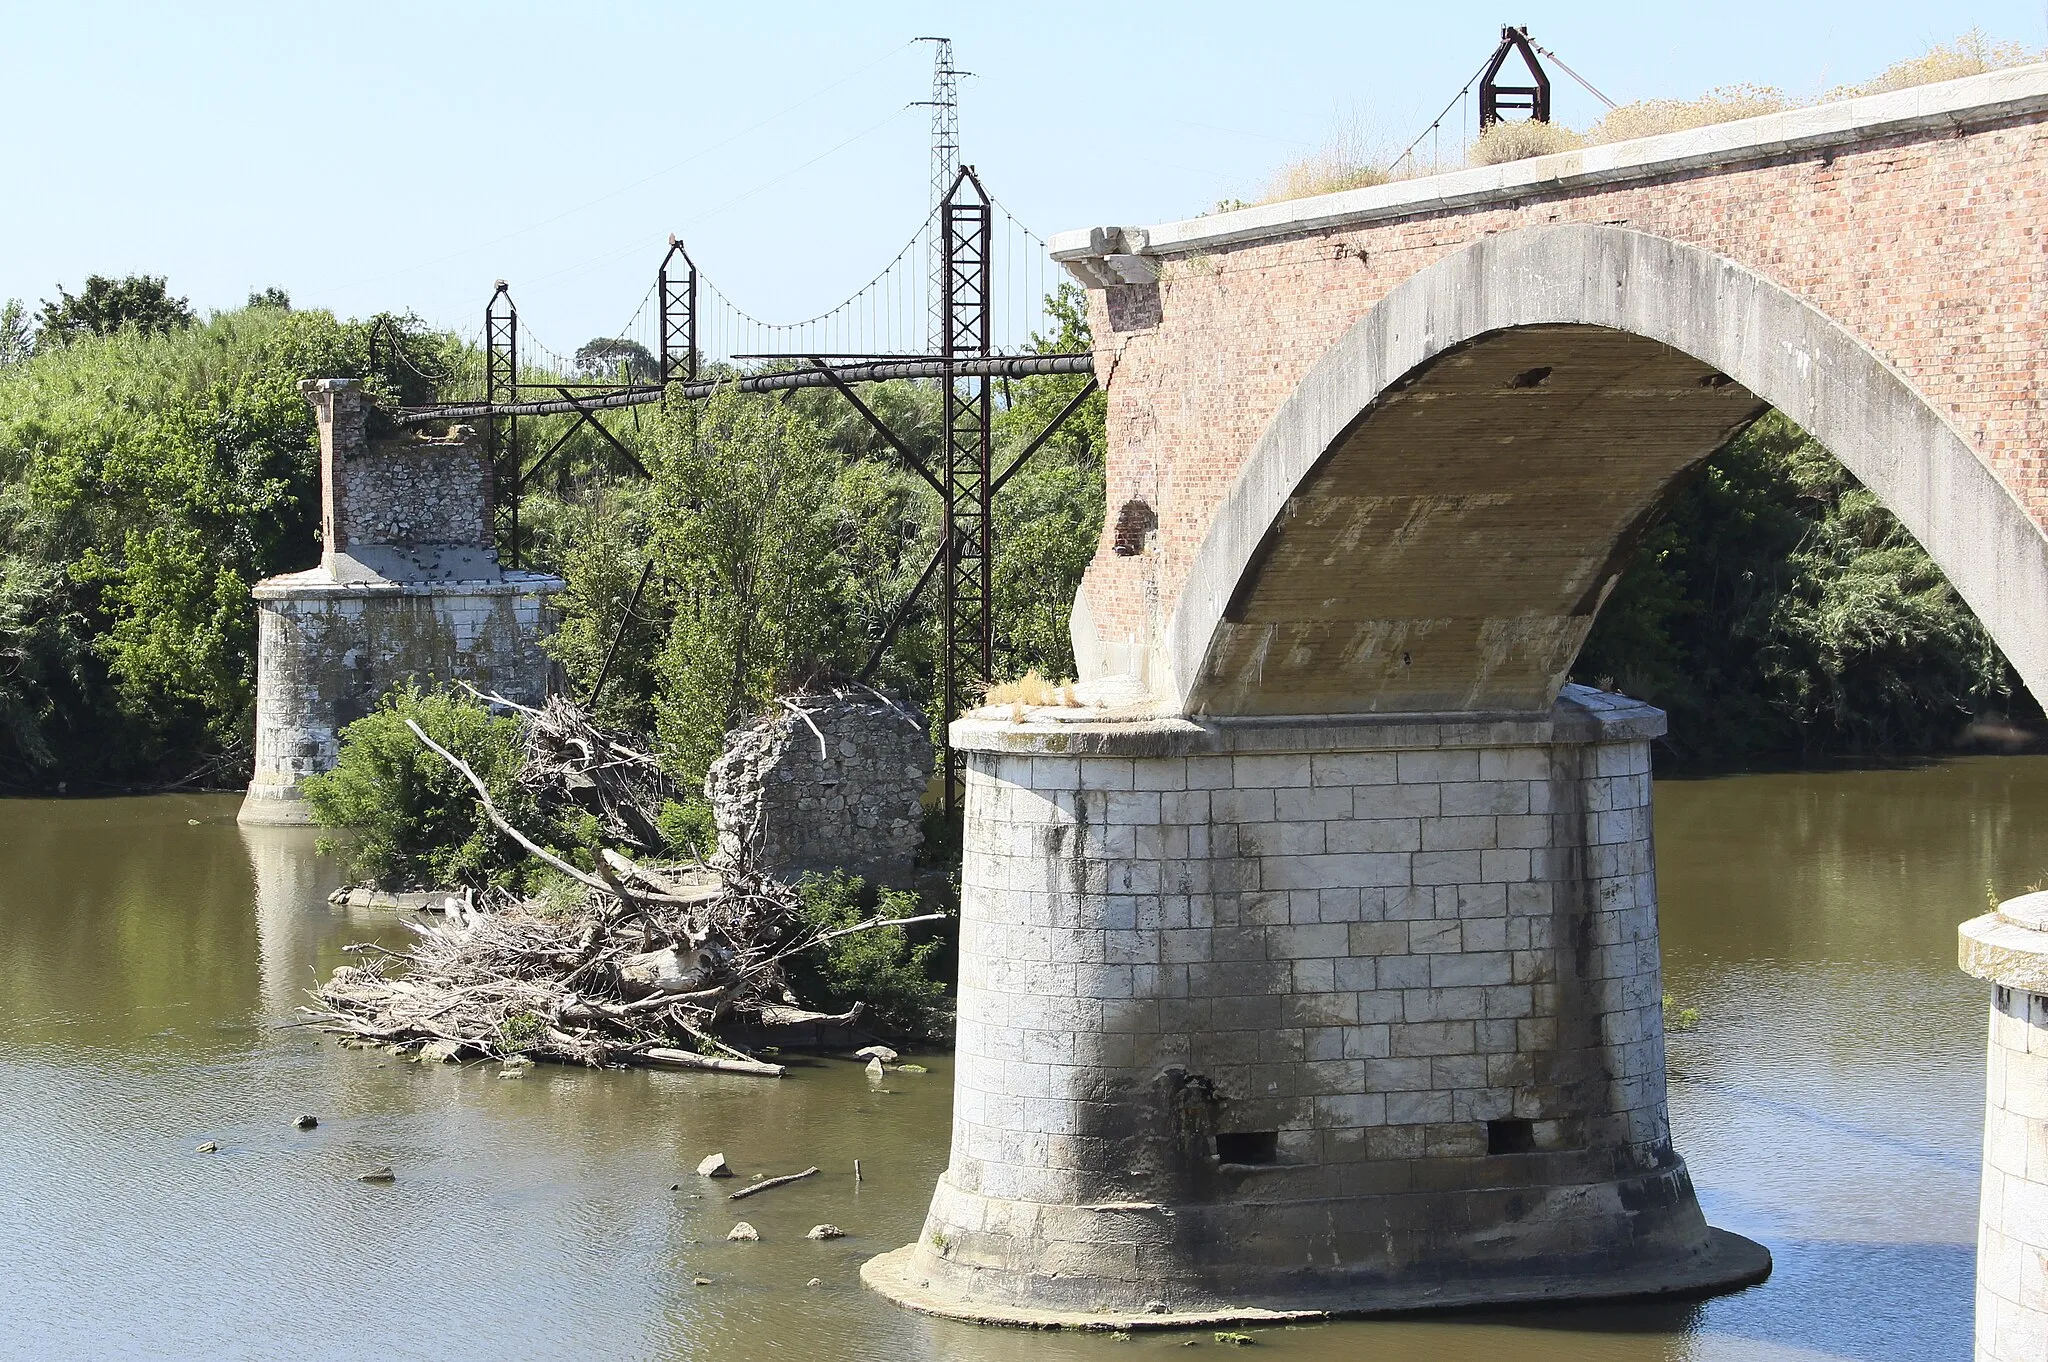 Photo showing: Calcinaia Railway bridge, Calcinaia, Province of Pisa, Tuscany, Italy.
Railway Pontedera-Lucca, 1928-1944